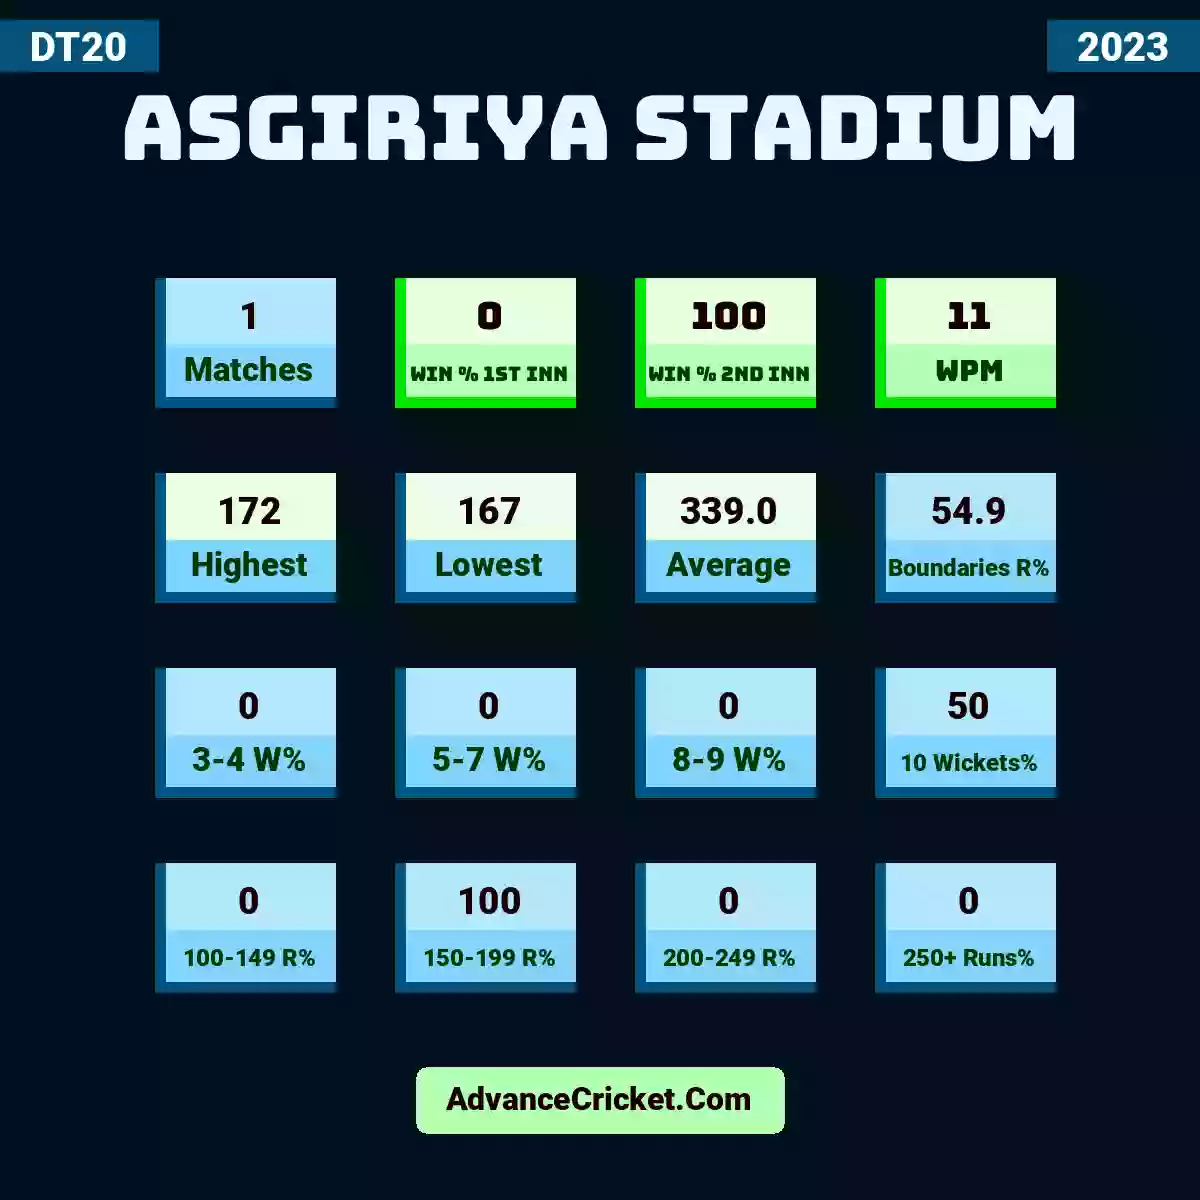 Image showing Asgiriya Stadium with Matches: 1, Win % 1st Inn: 0, Win % 2nd Inn: 100, WPM: 11, Highest: 172, Lowest: 167, Average: 339.0, Boundaries R%: 54.9, 3-4 W%: 0, 5-7 W%: 0, 8-9 W%: 0, 10 Wickets%: 50, 100-149 R%: 0, 150-199 R%: 100, 200-249 R%: 0, 250+ Runs%: 0.